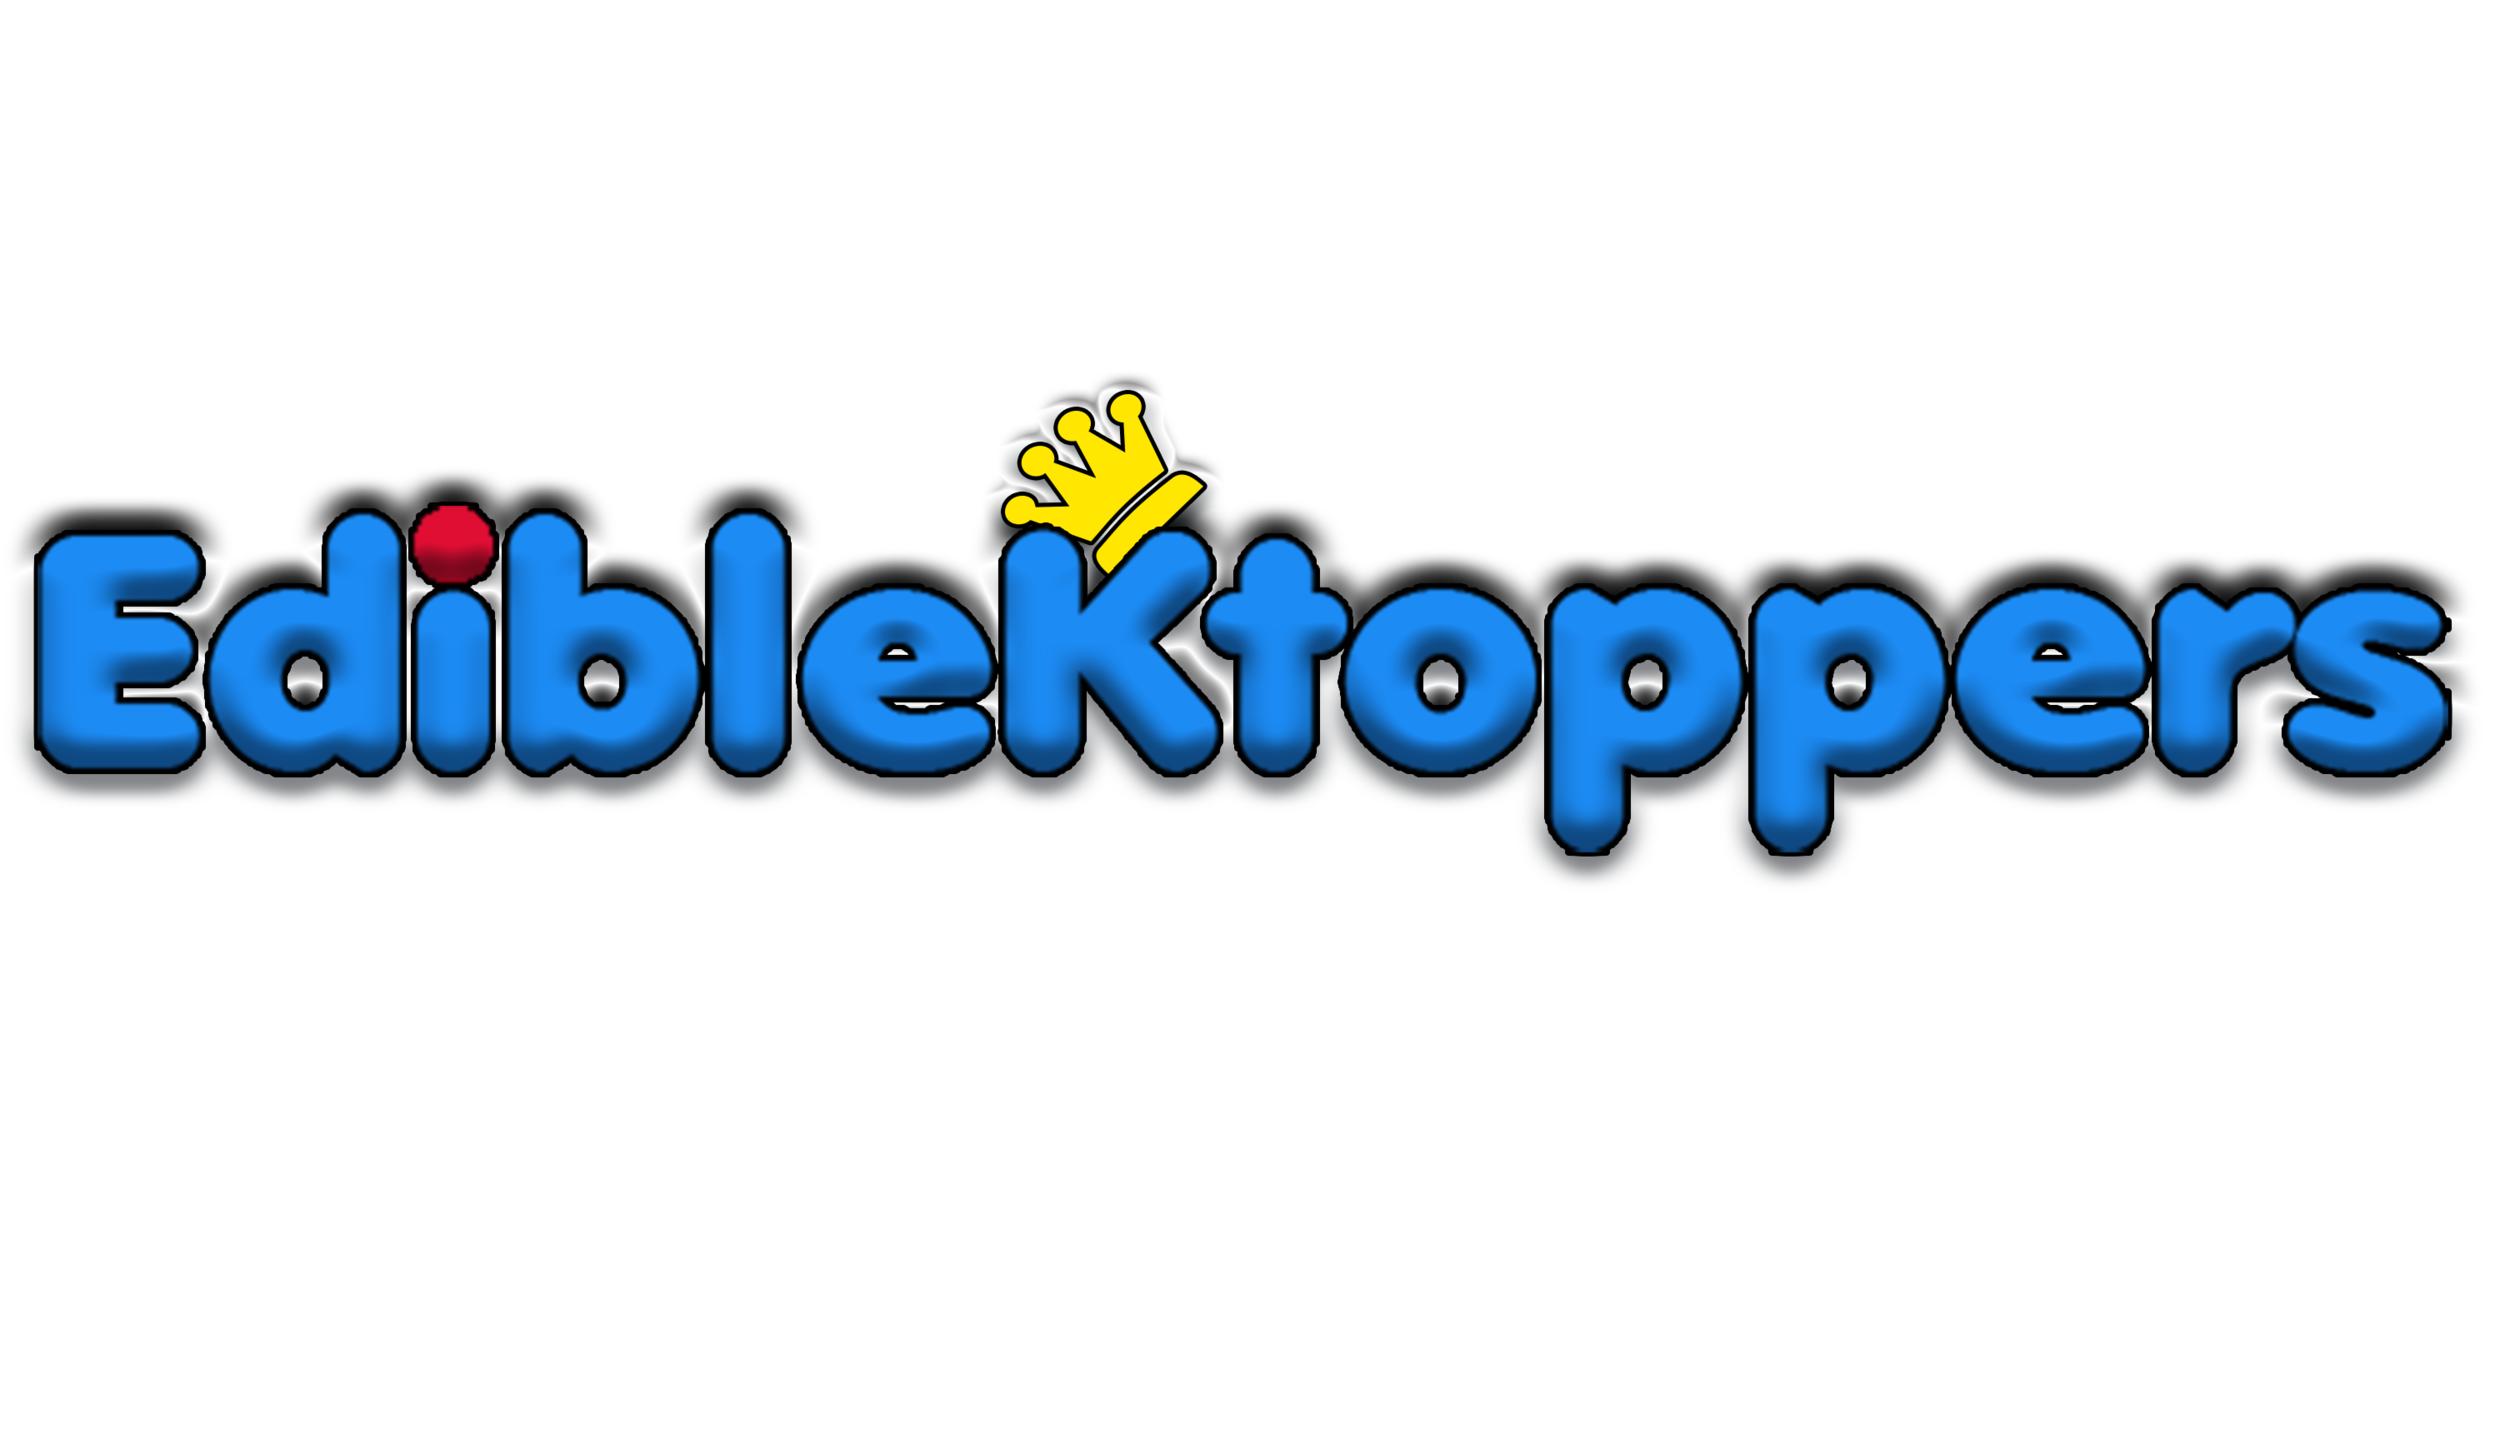 ROBLOX LOGO - EDIBLE CAKE TOPPER - APPROX 14CM - AMAZING!!